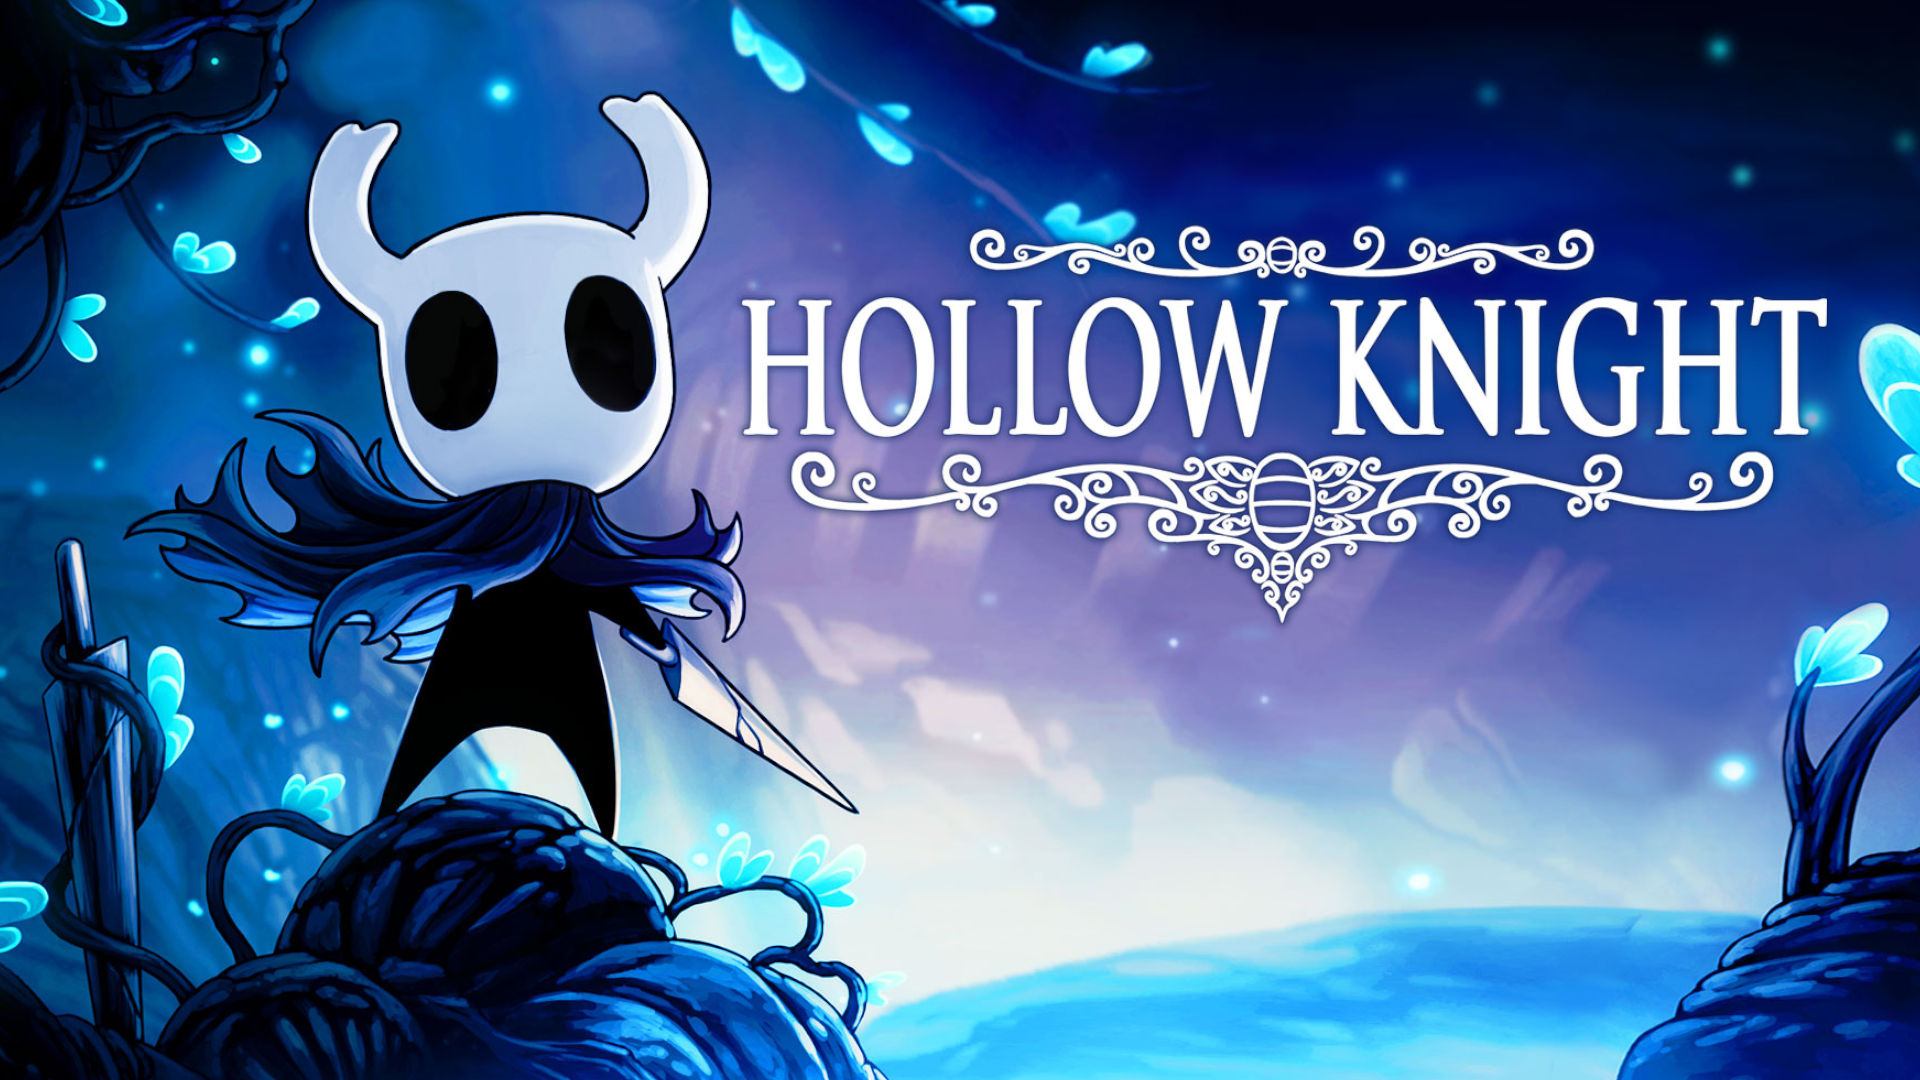 Hollow Knight key art